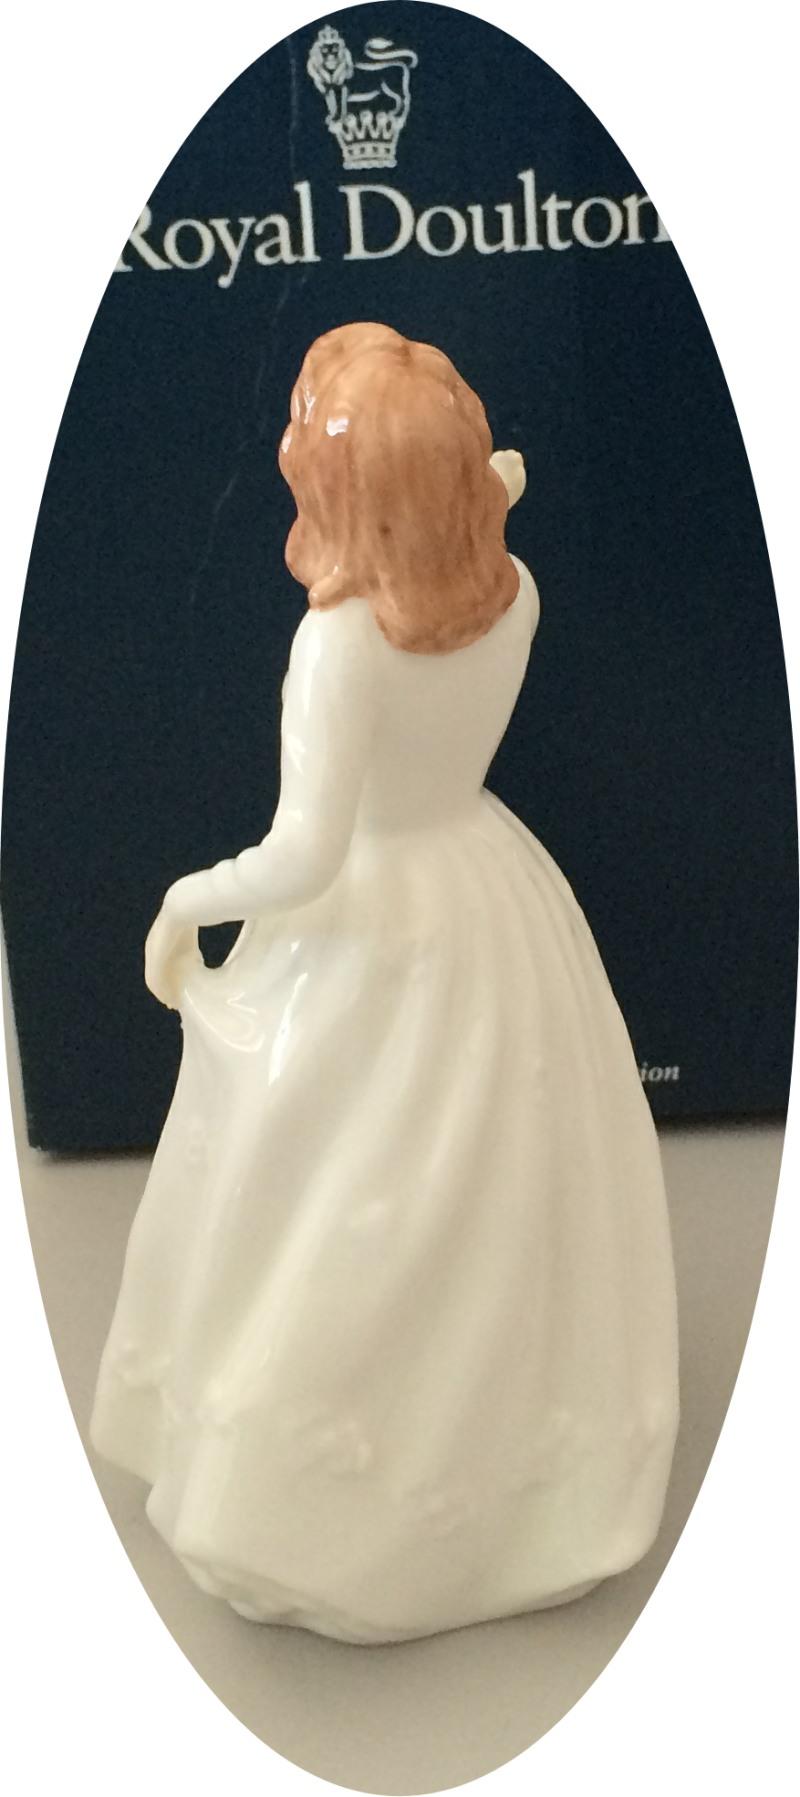 Royal Doulton Joy figurine HN3875  13.5cm tall, in original box